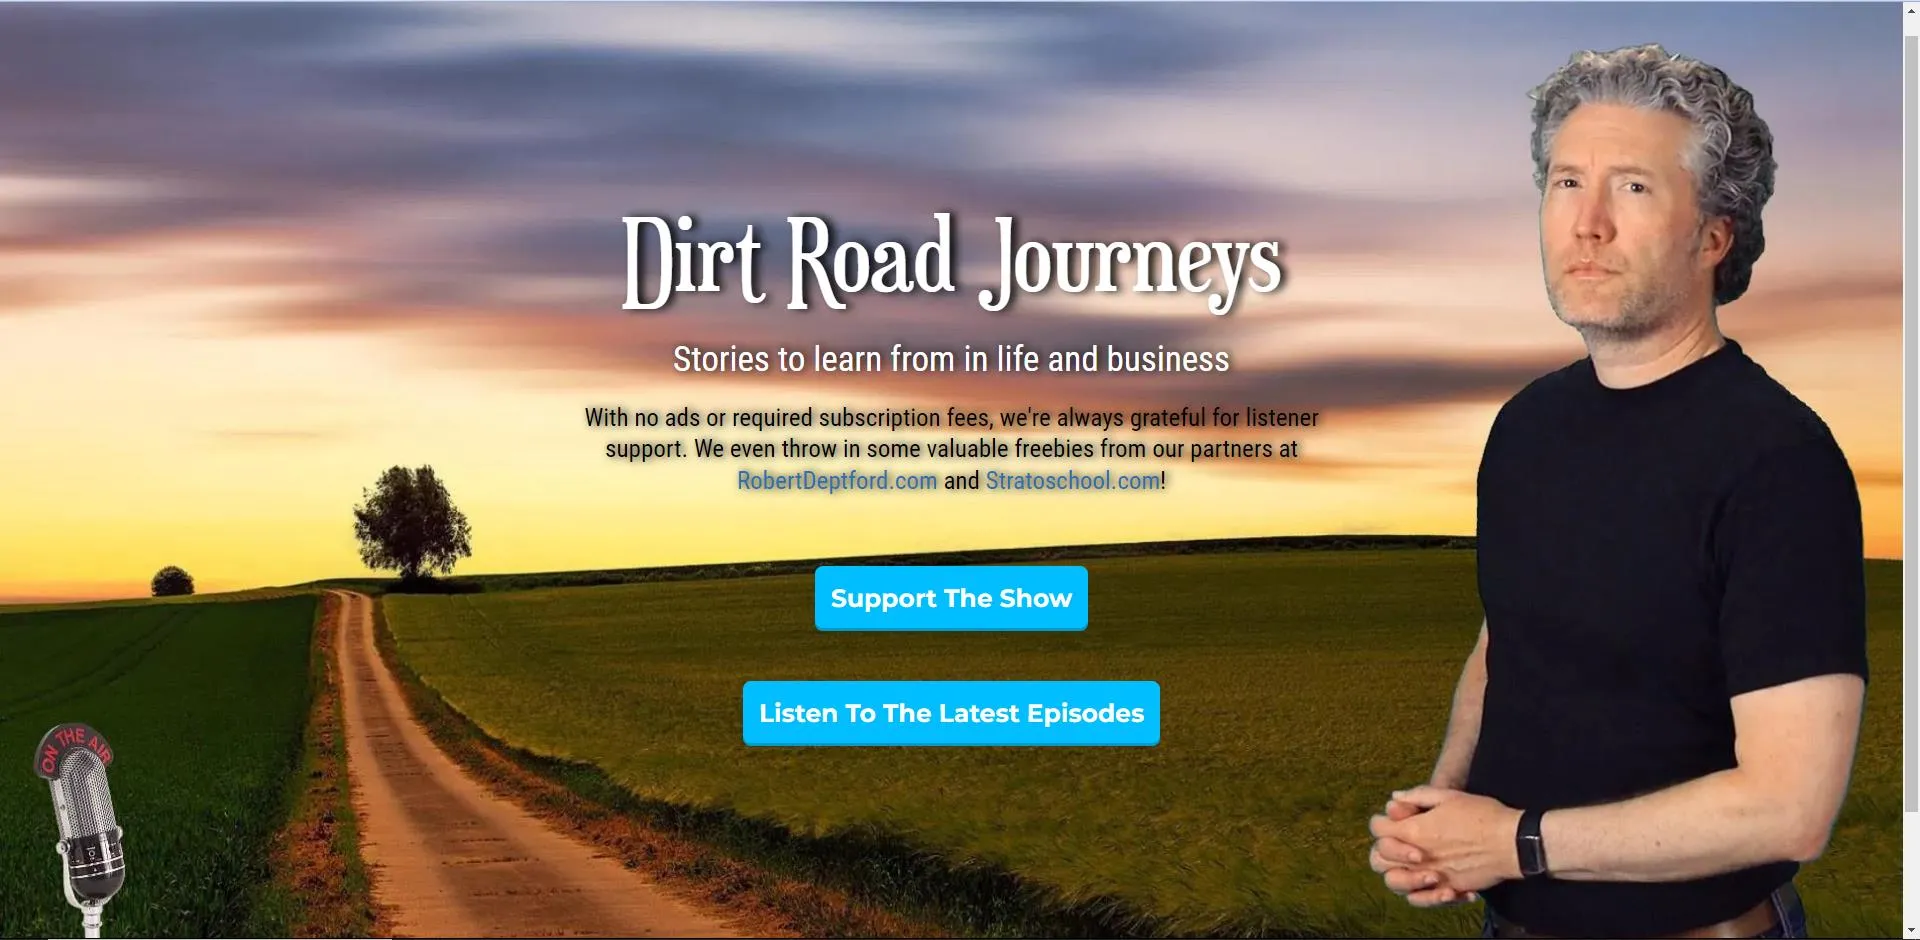 Web design example - Dirt Road Journeys Podcast